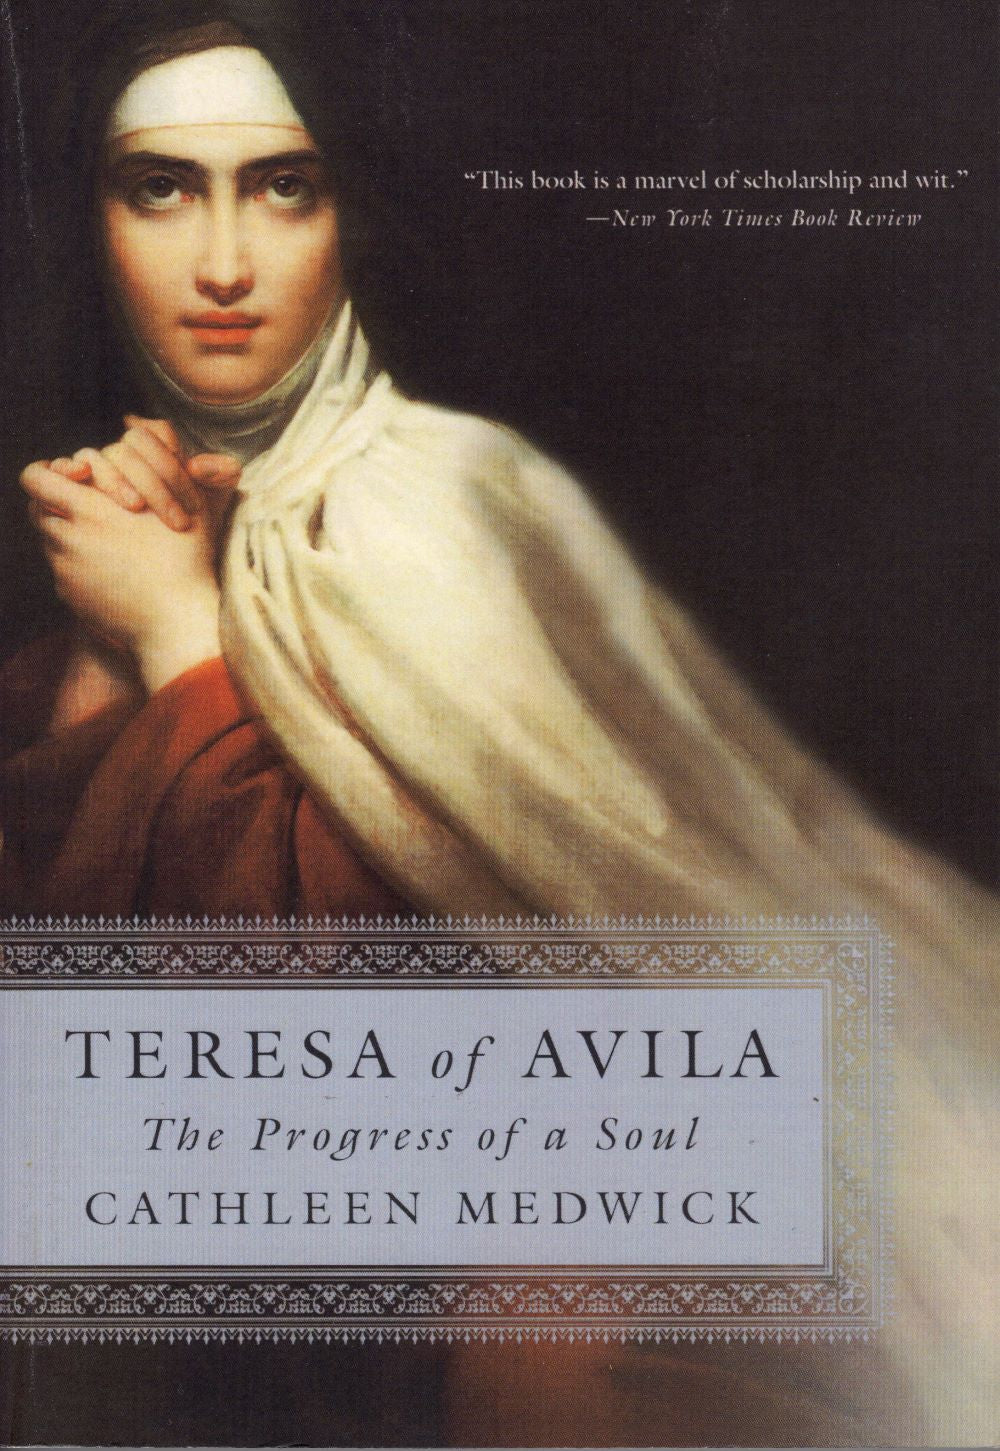 TERESA OF AVILA: The Progress of a Soul (2001)